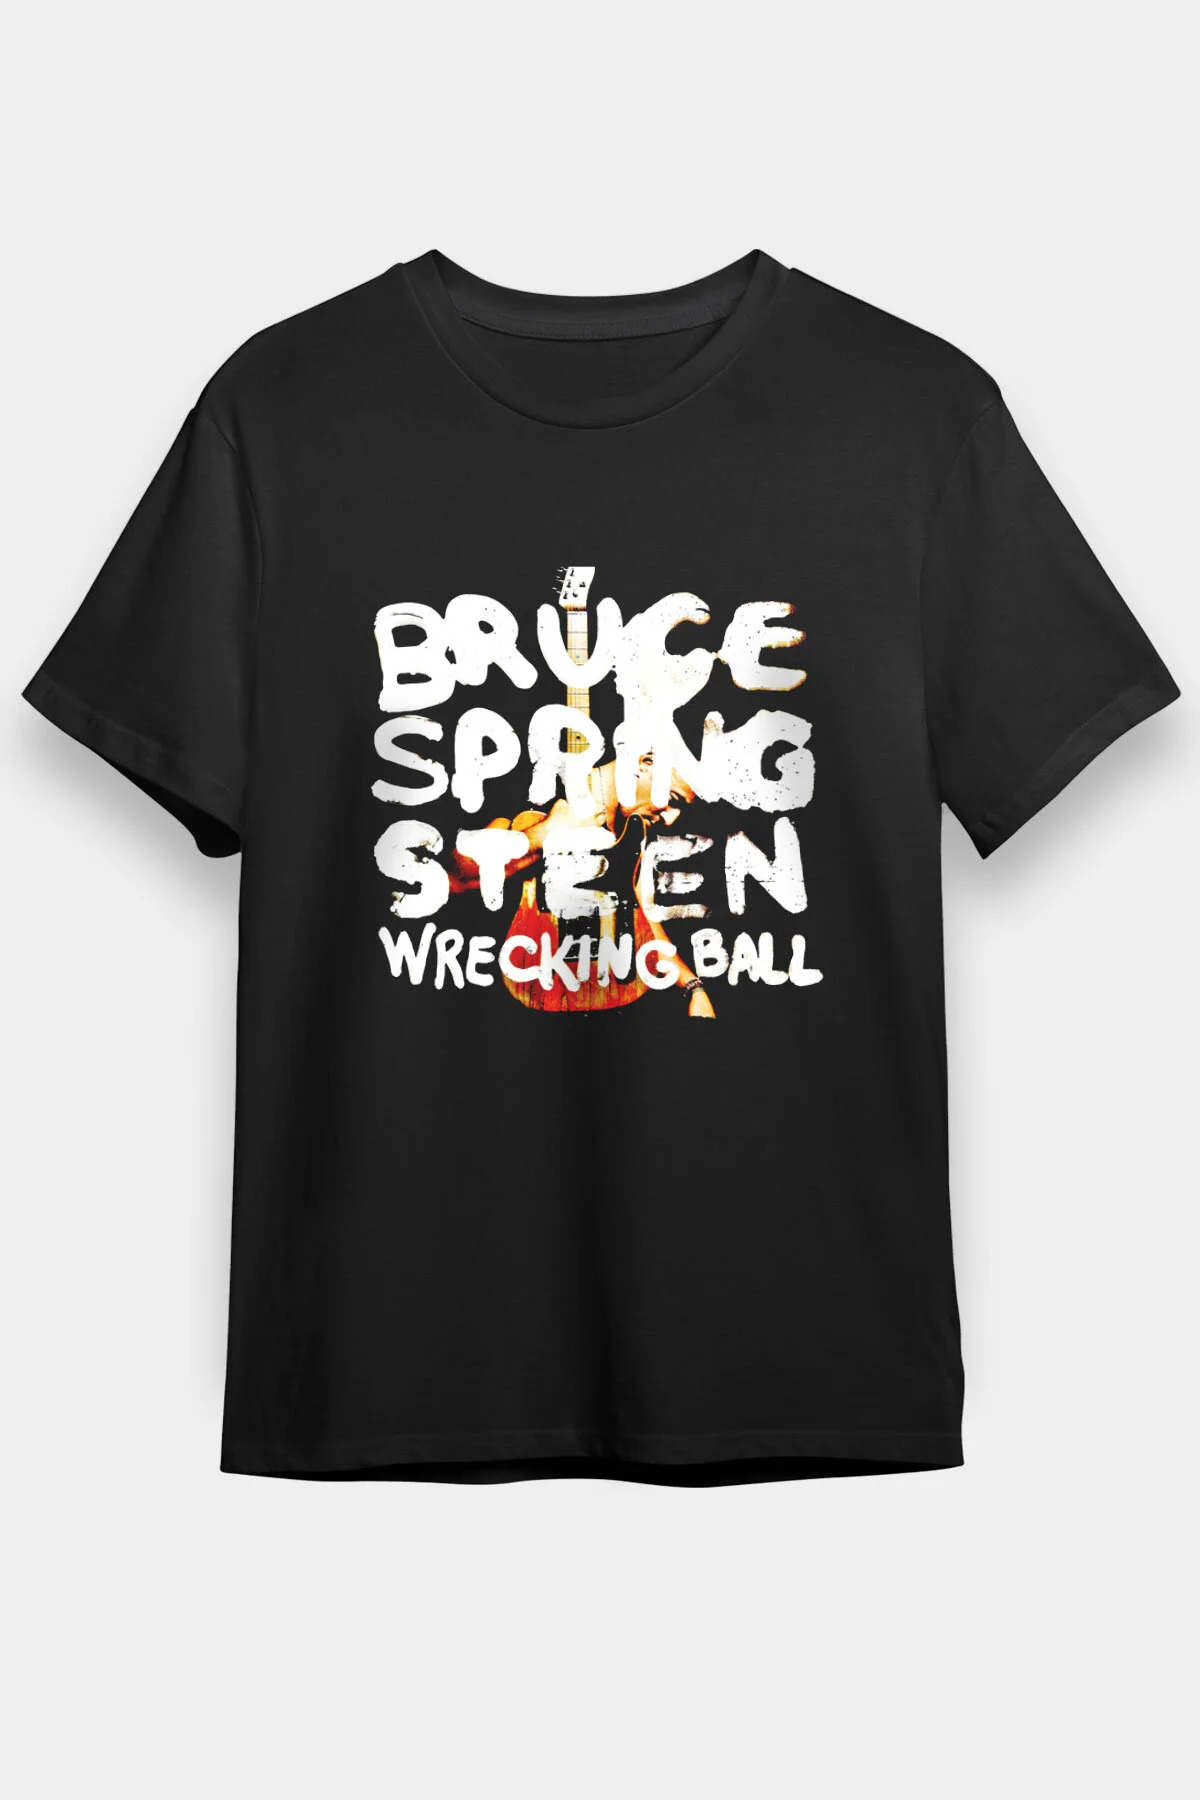 Bruce Springsteen American Rock singer Unisex Tshirt